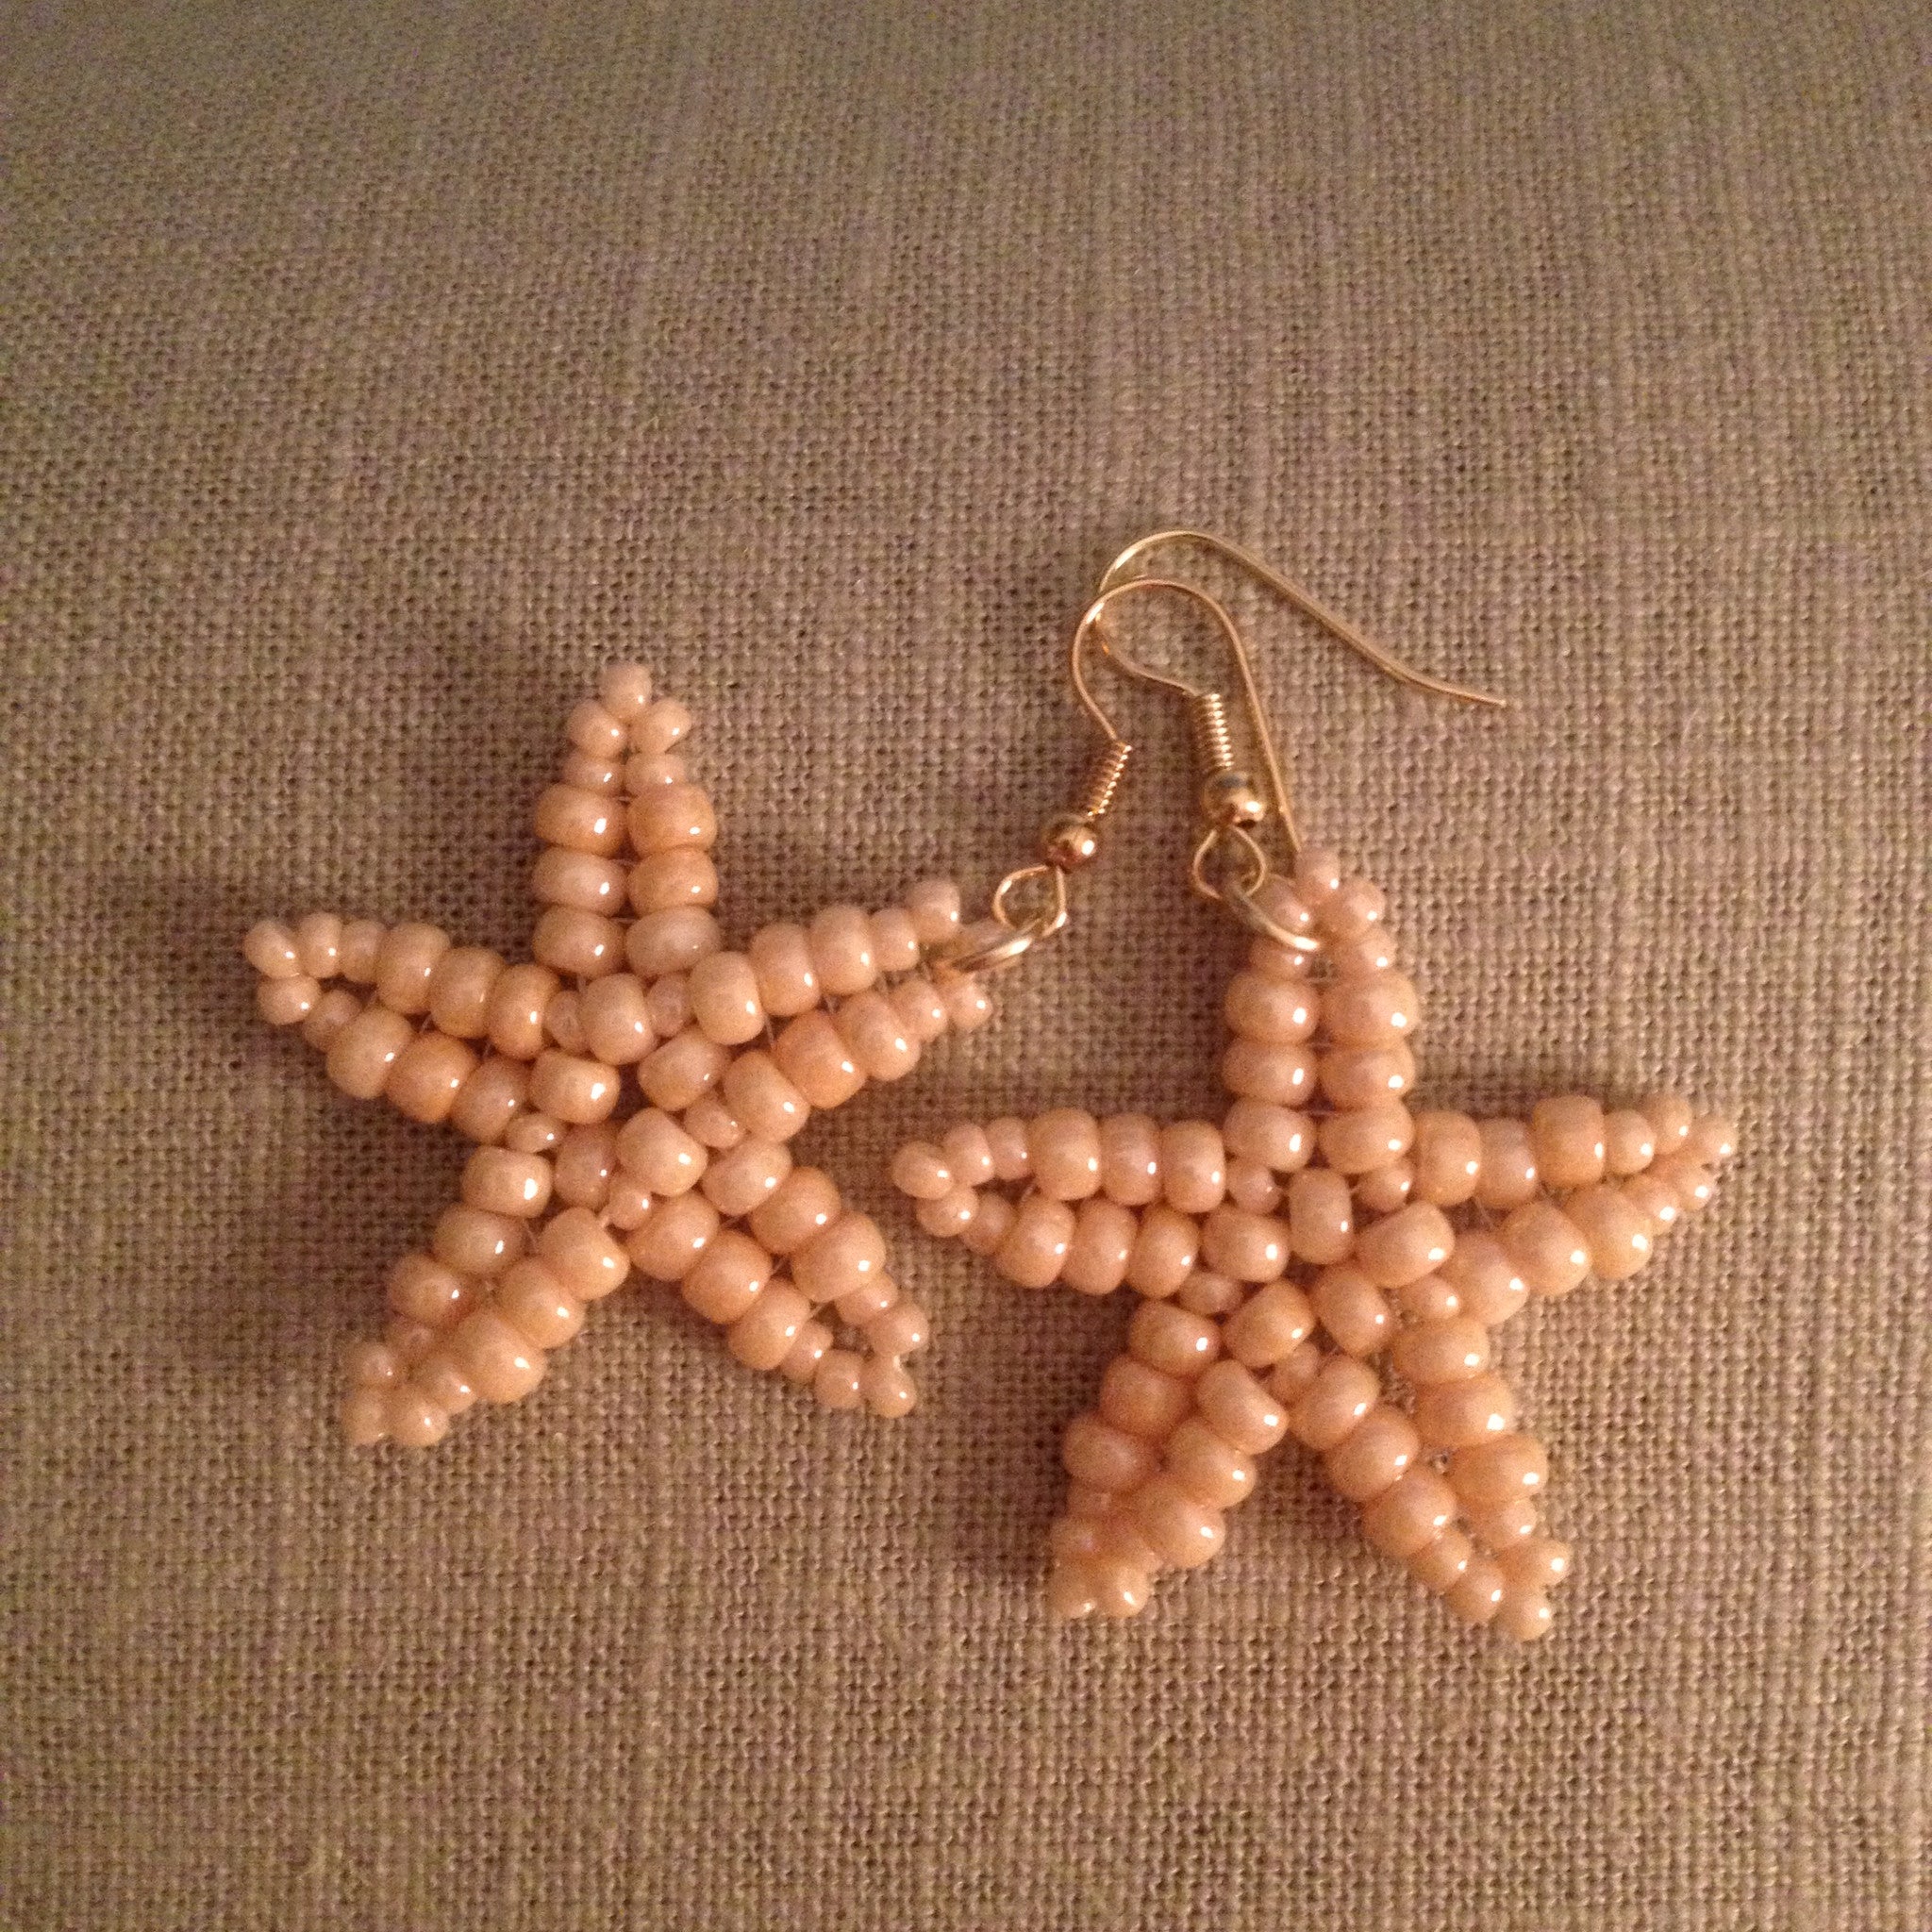 Starfish beaded handmade earrings in Creamy champagne beige resort cruise wear beachy fun